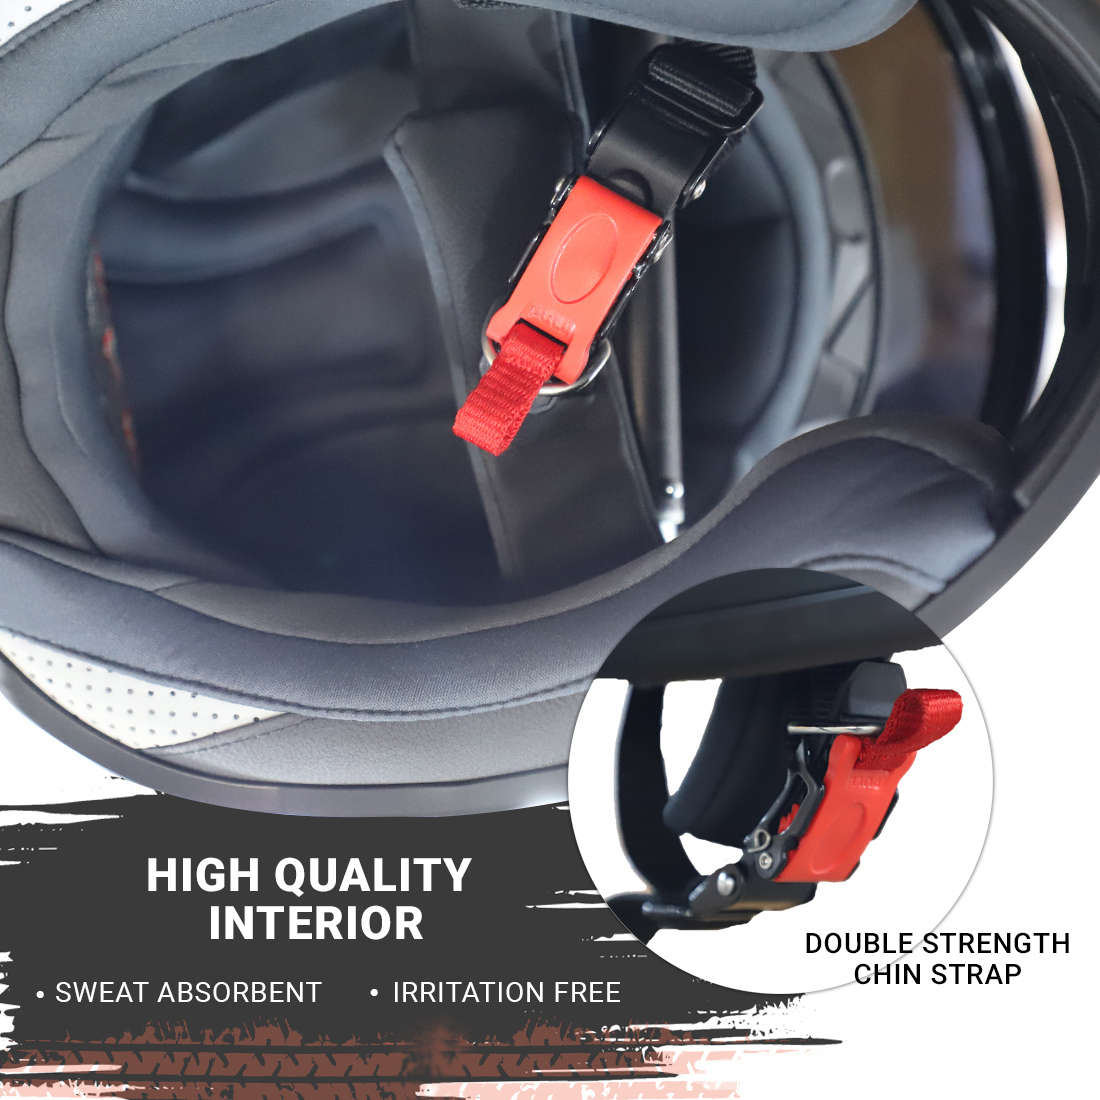 Steelbird SBH-17 Terminator ISI Certified Full Face Graphic Helmet (Matt Black Red With Smoke Visor)